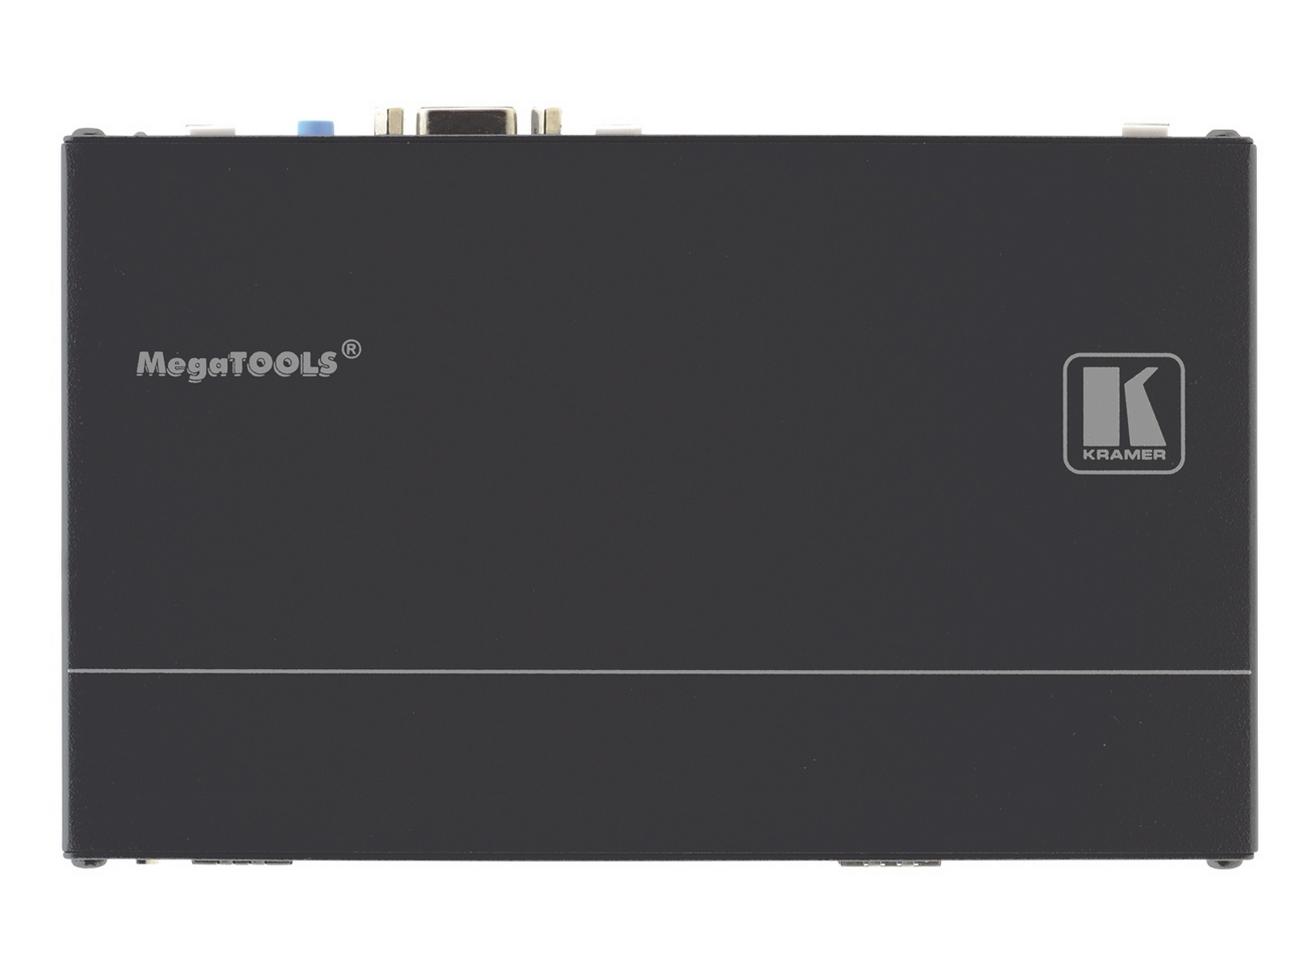 DIP-20 HDMI/XGA with Ethernet/Bidirect RS-232 over HDBaseT Extender (Transmitter) by Kramer